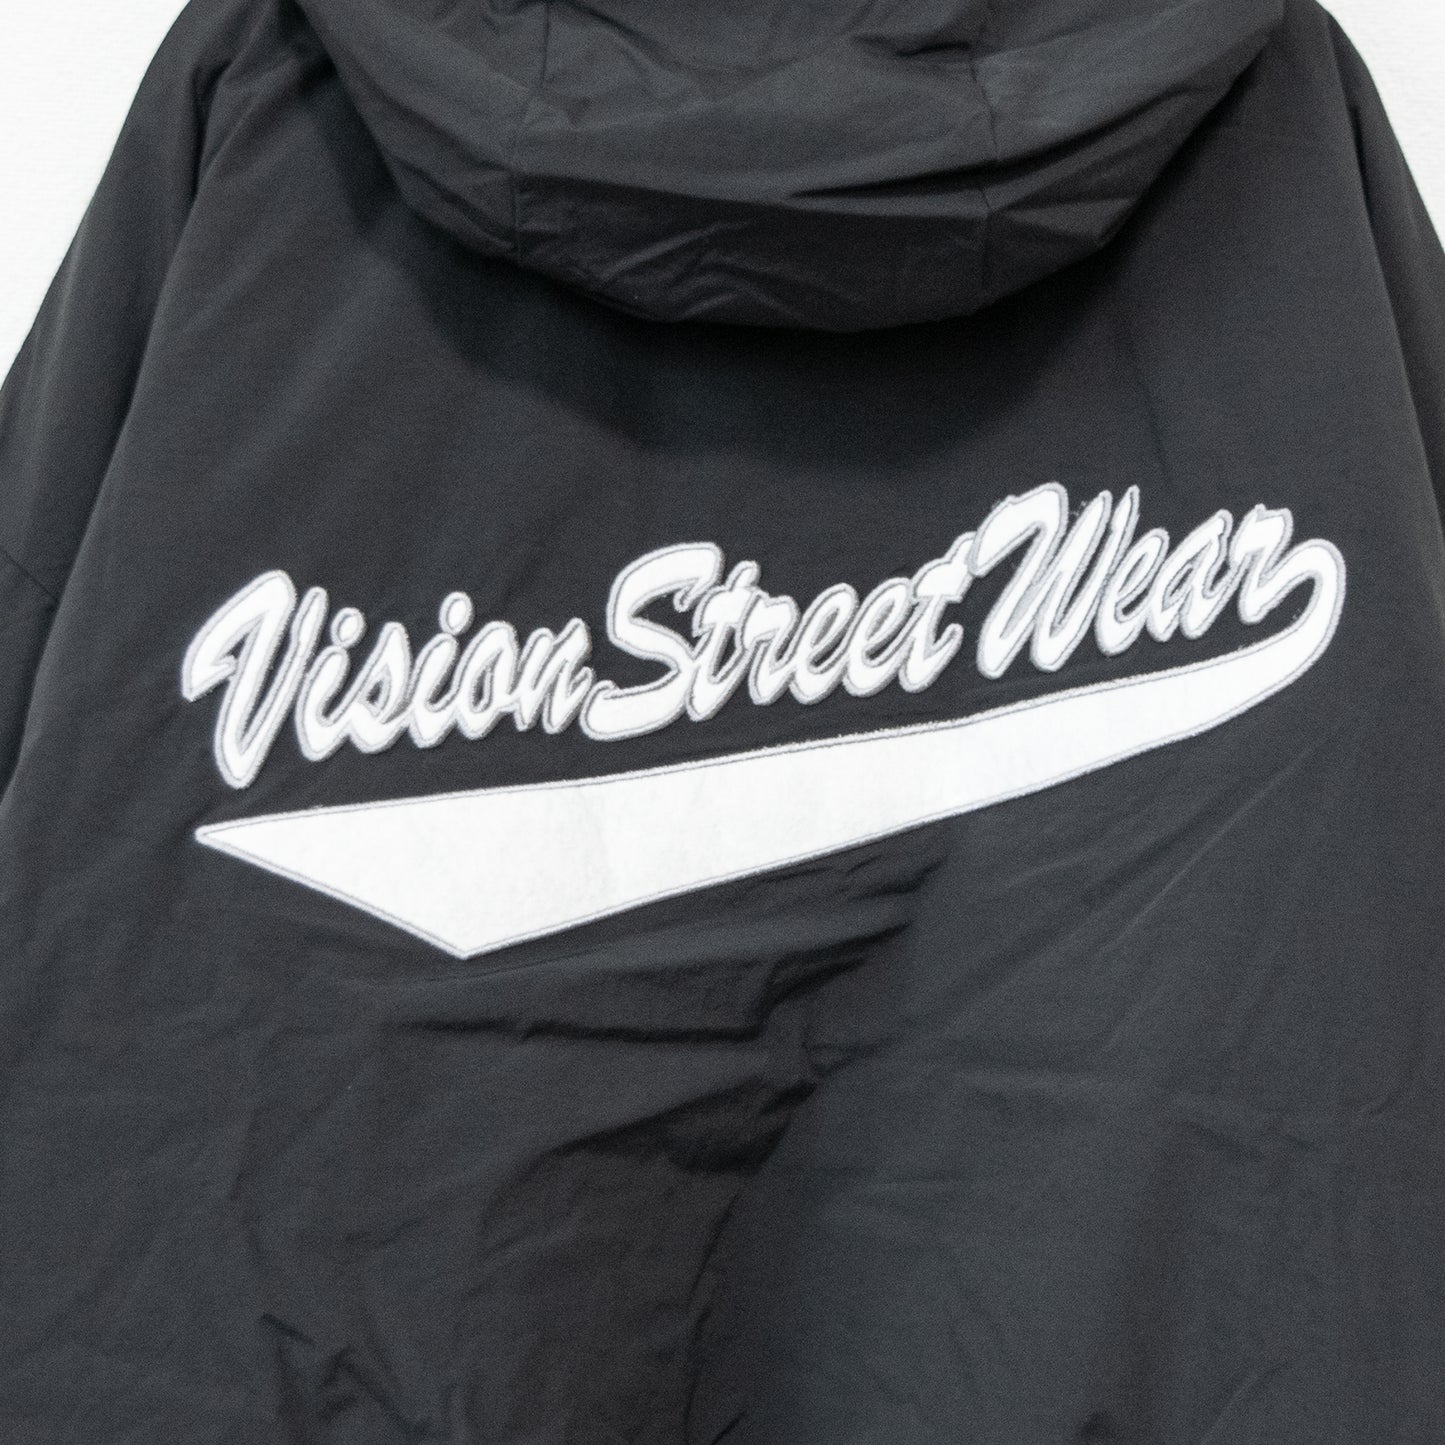 VISION STREET WEAR Padded Nylon Patch Blouson Jacket BLACK